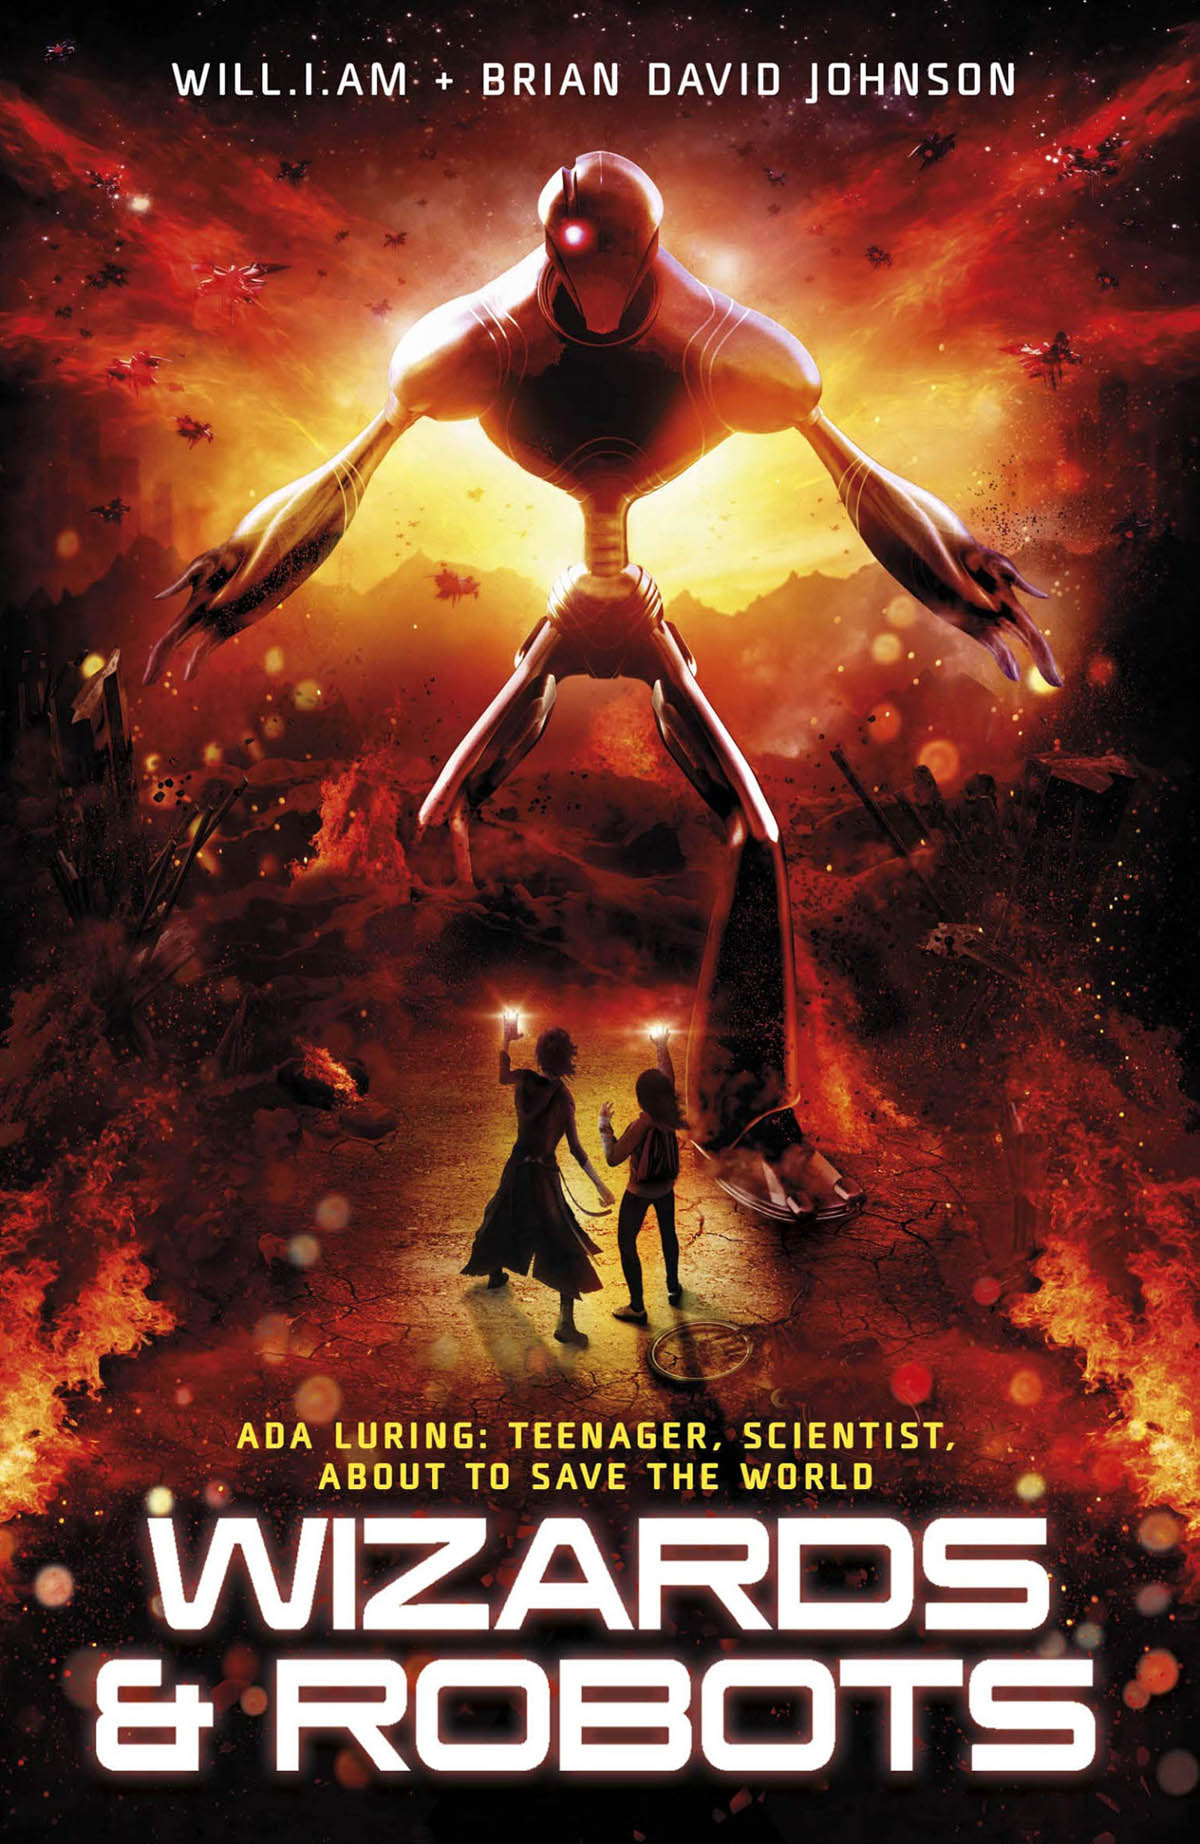 movie poster design scifi cgi wizards robots